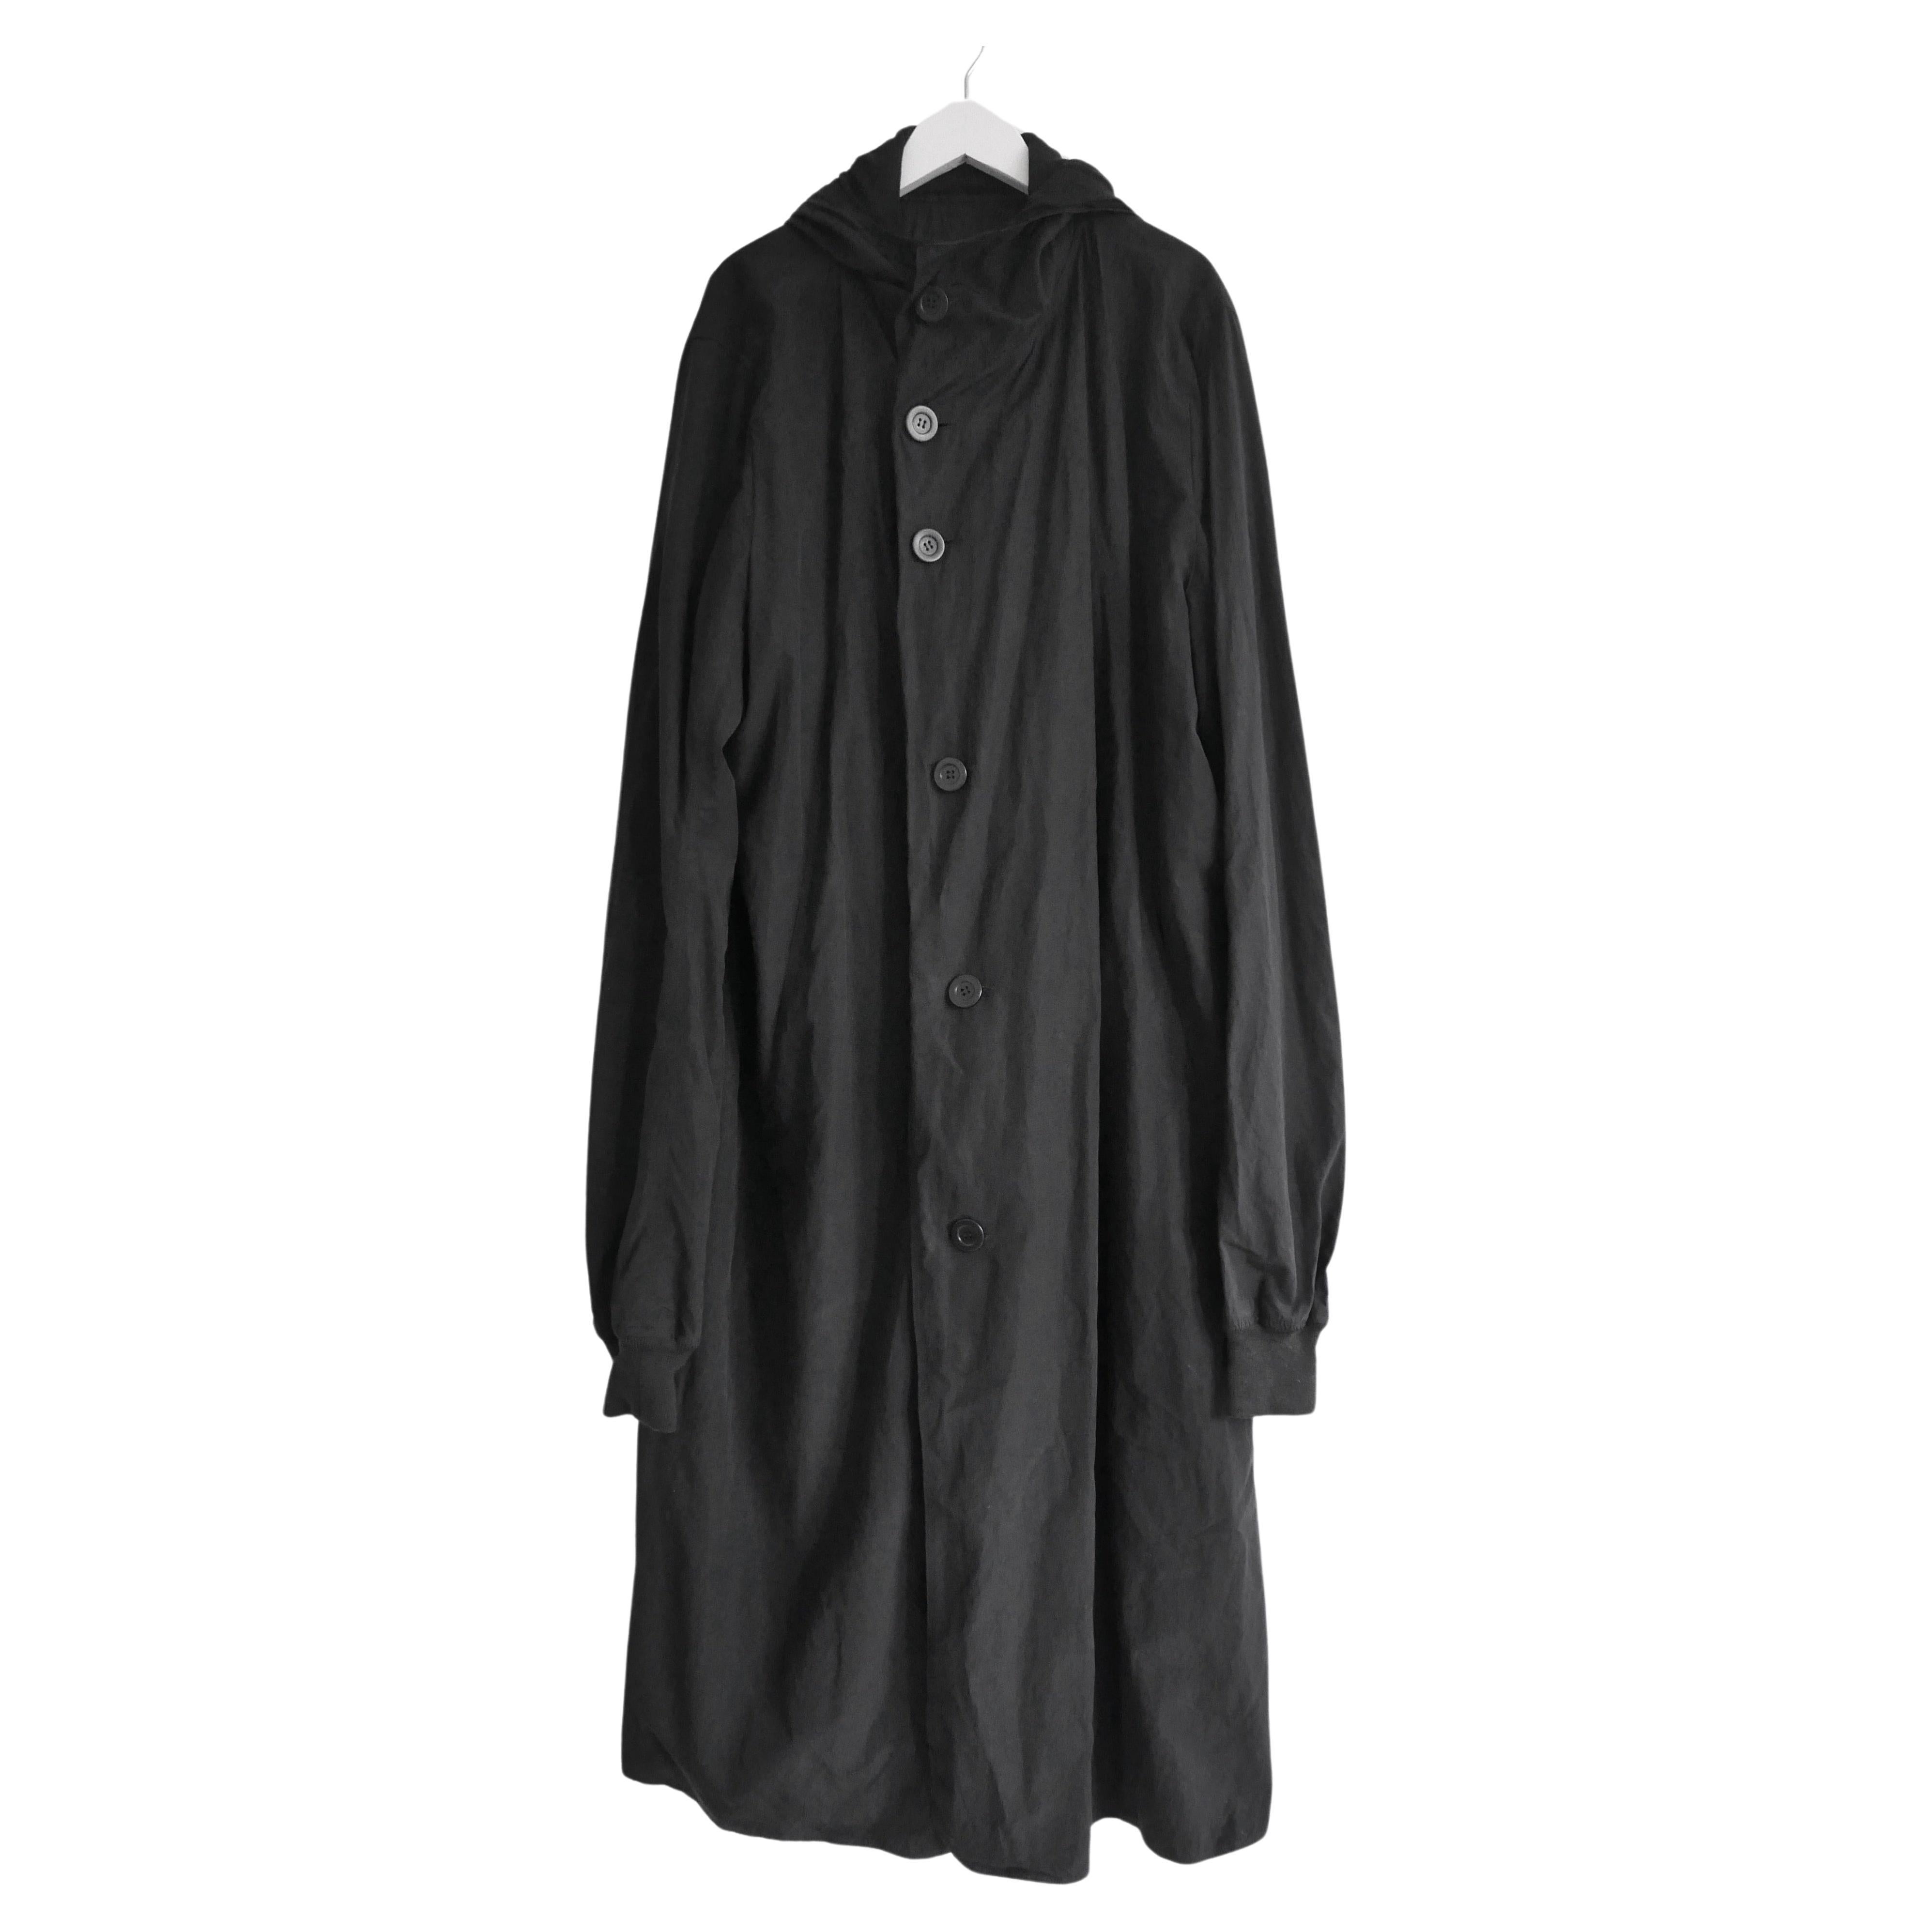 Rick Owens SS08 Creatch Black Coat For Sale